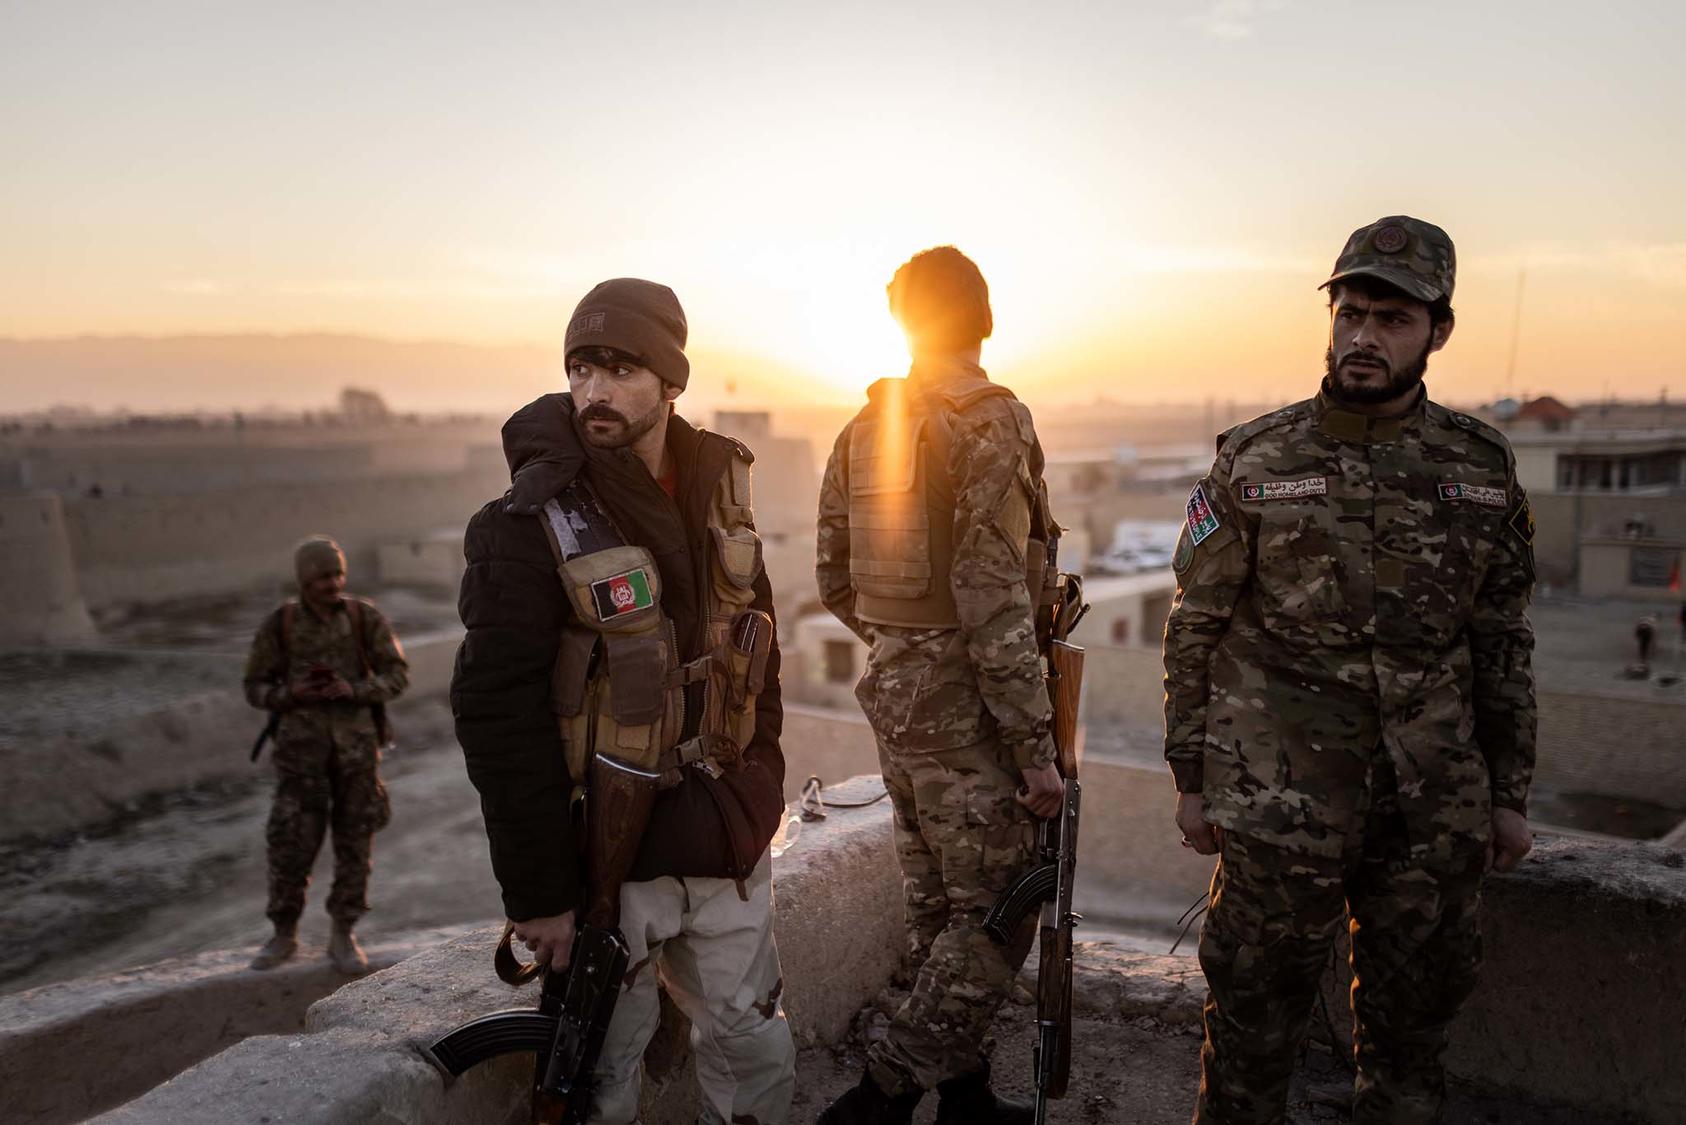 Policemen stationed at a guard post on Mazar-i-Sharif’s defensive walls in Balkh Province, Afghanistan, on Jan. 17, 2021. (Jim Huylebroek/The New York Times)